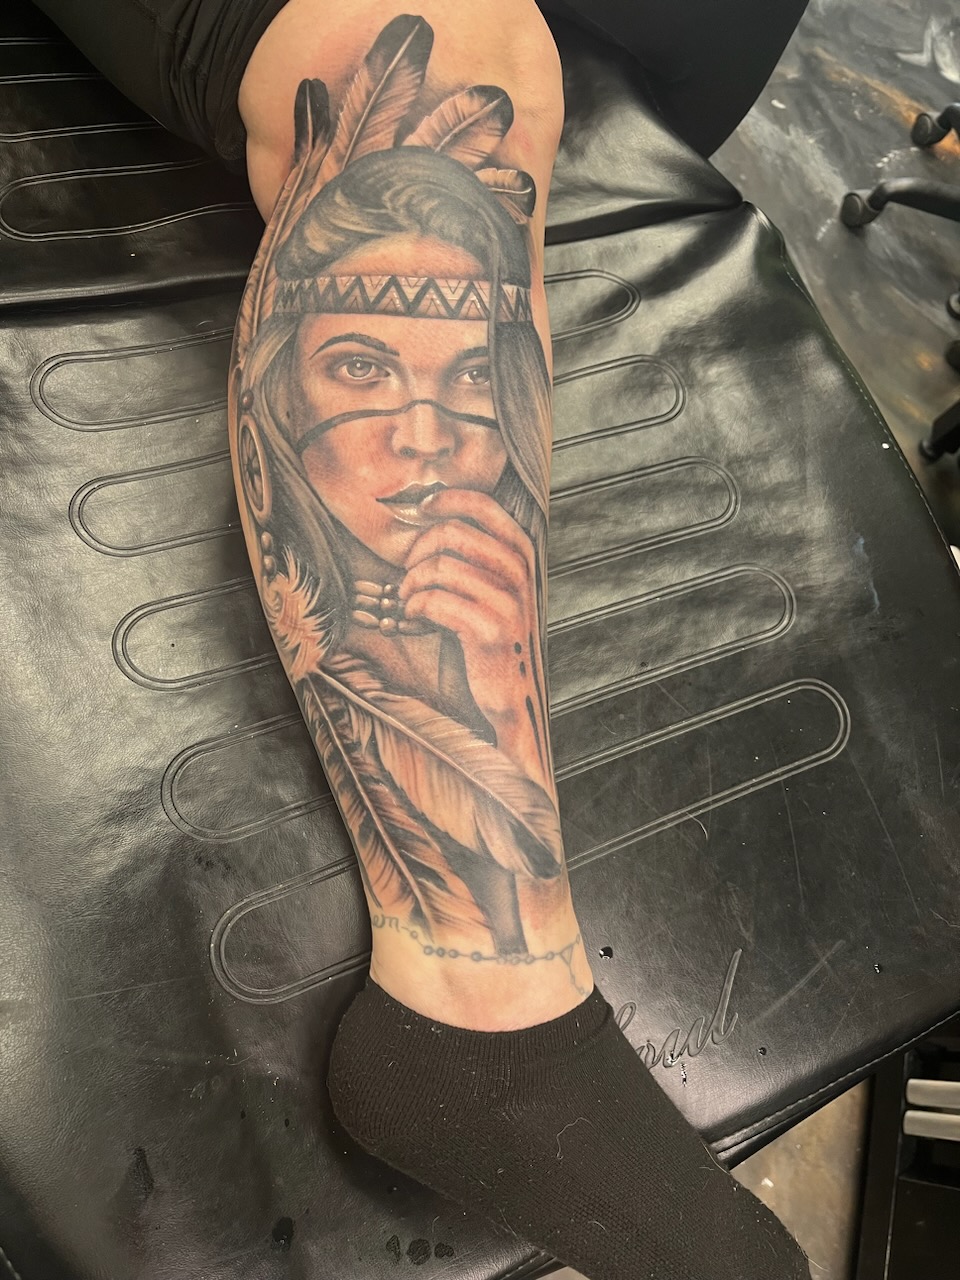 UniquInk Tattoos & Piercings Cincinnati (513)752-6100